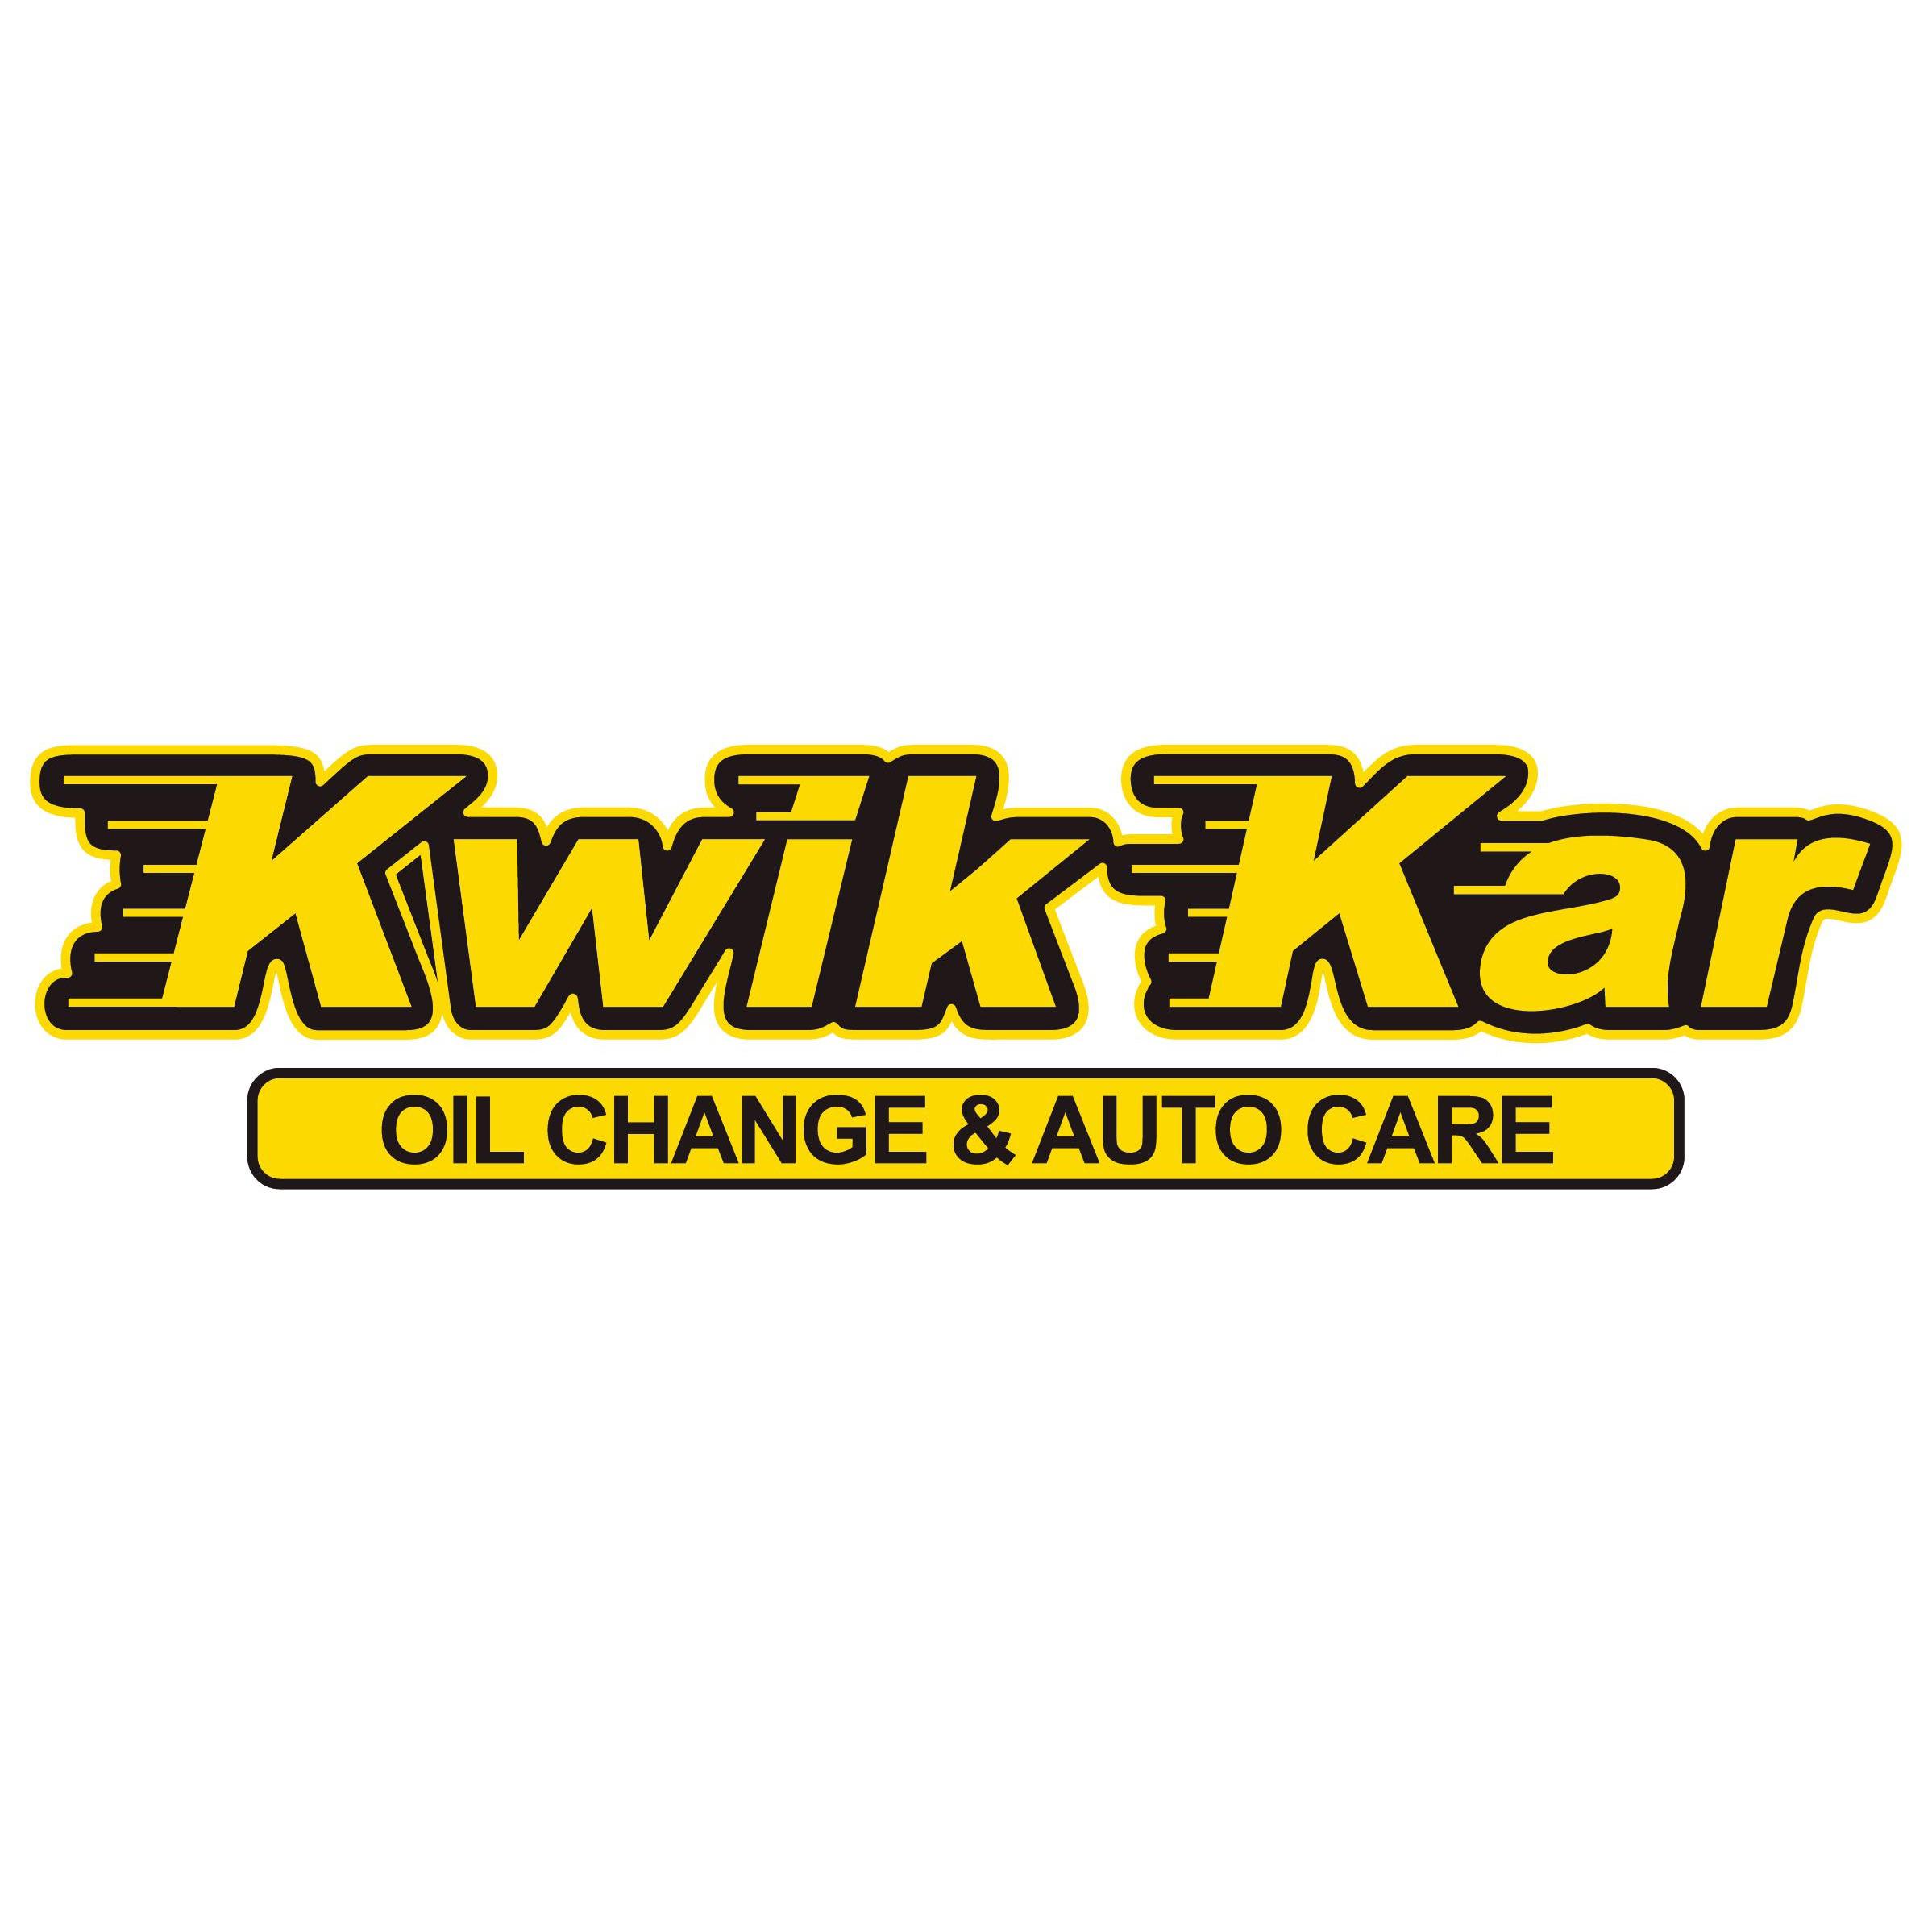 Kwik Kar Oil Change & Auto Care - Plano, TX 75074-6204 - (972)578-2877 | ShowMeLocal.com